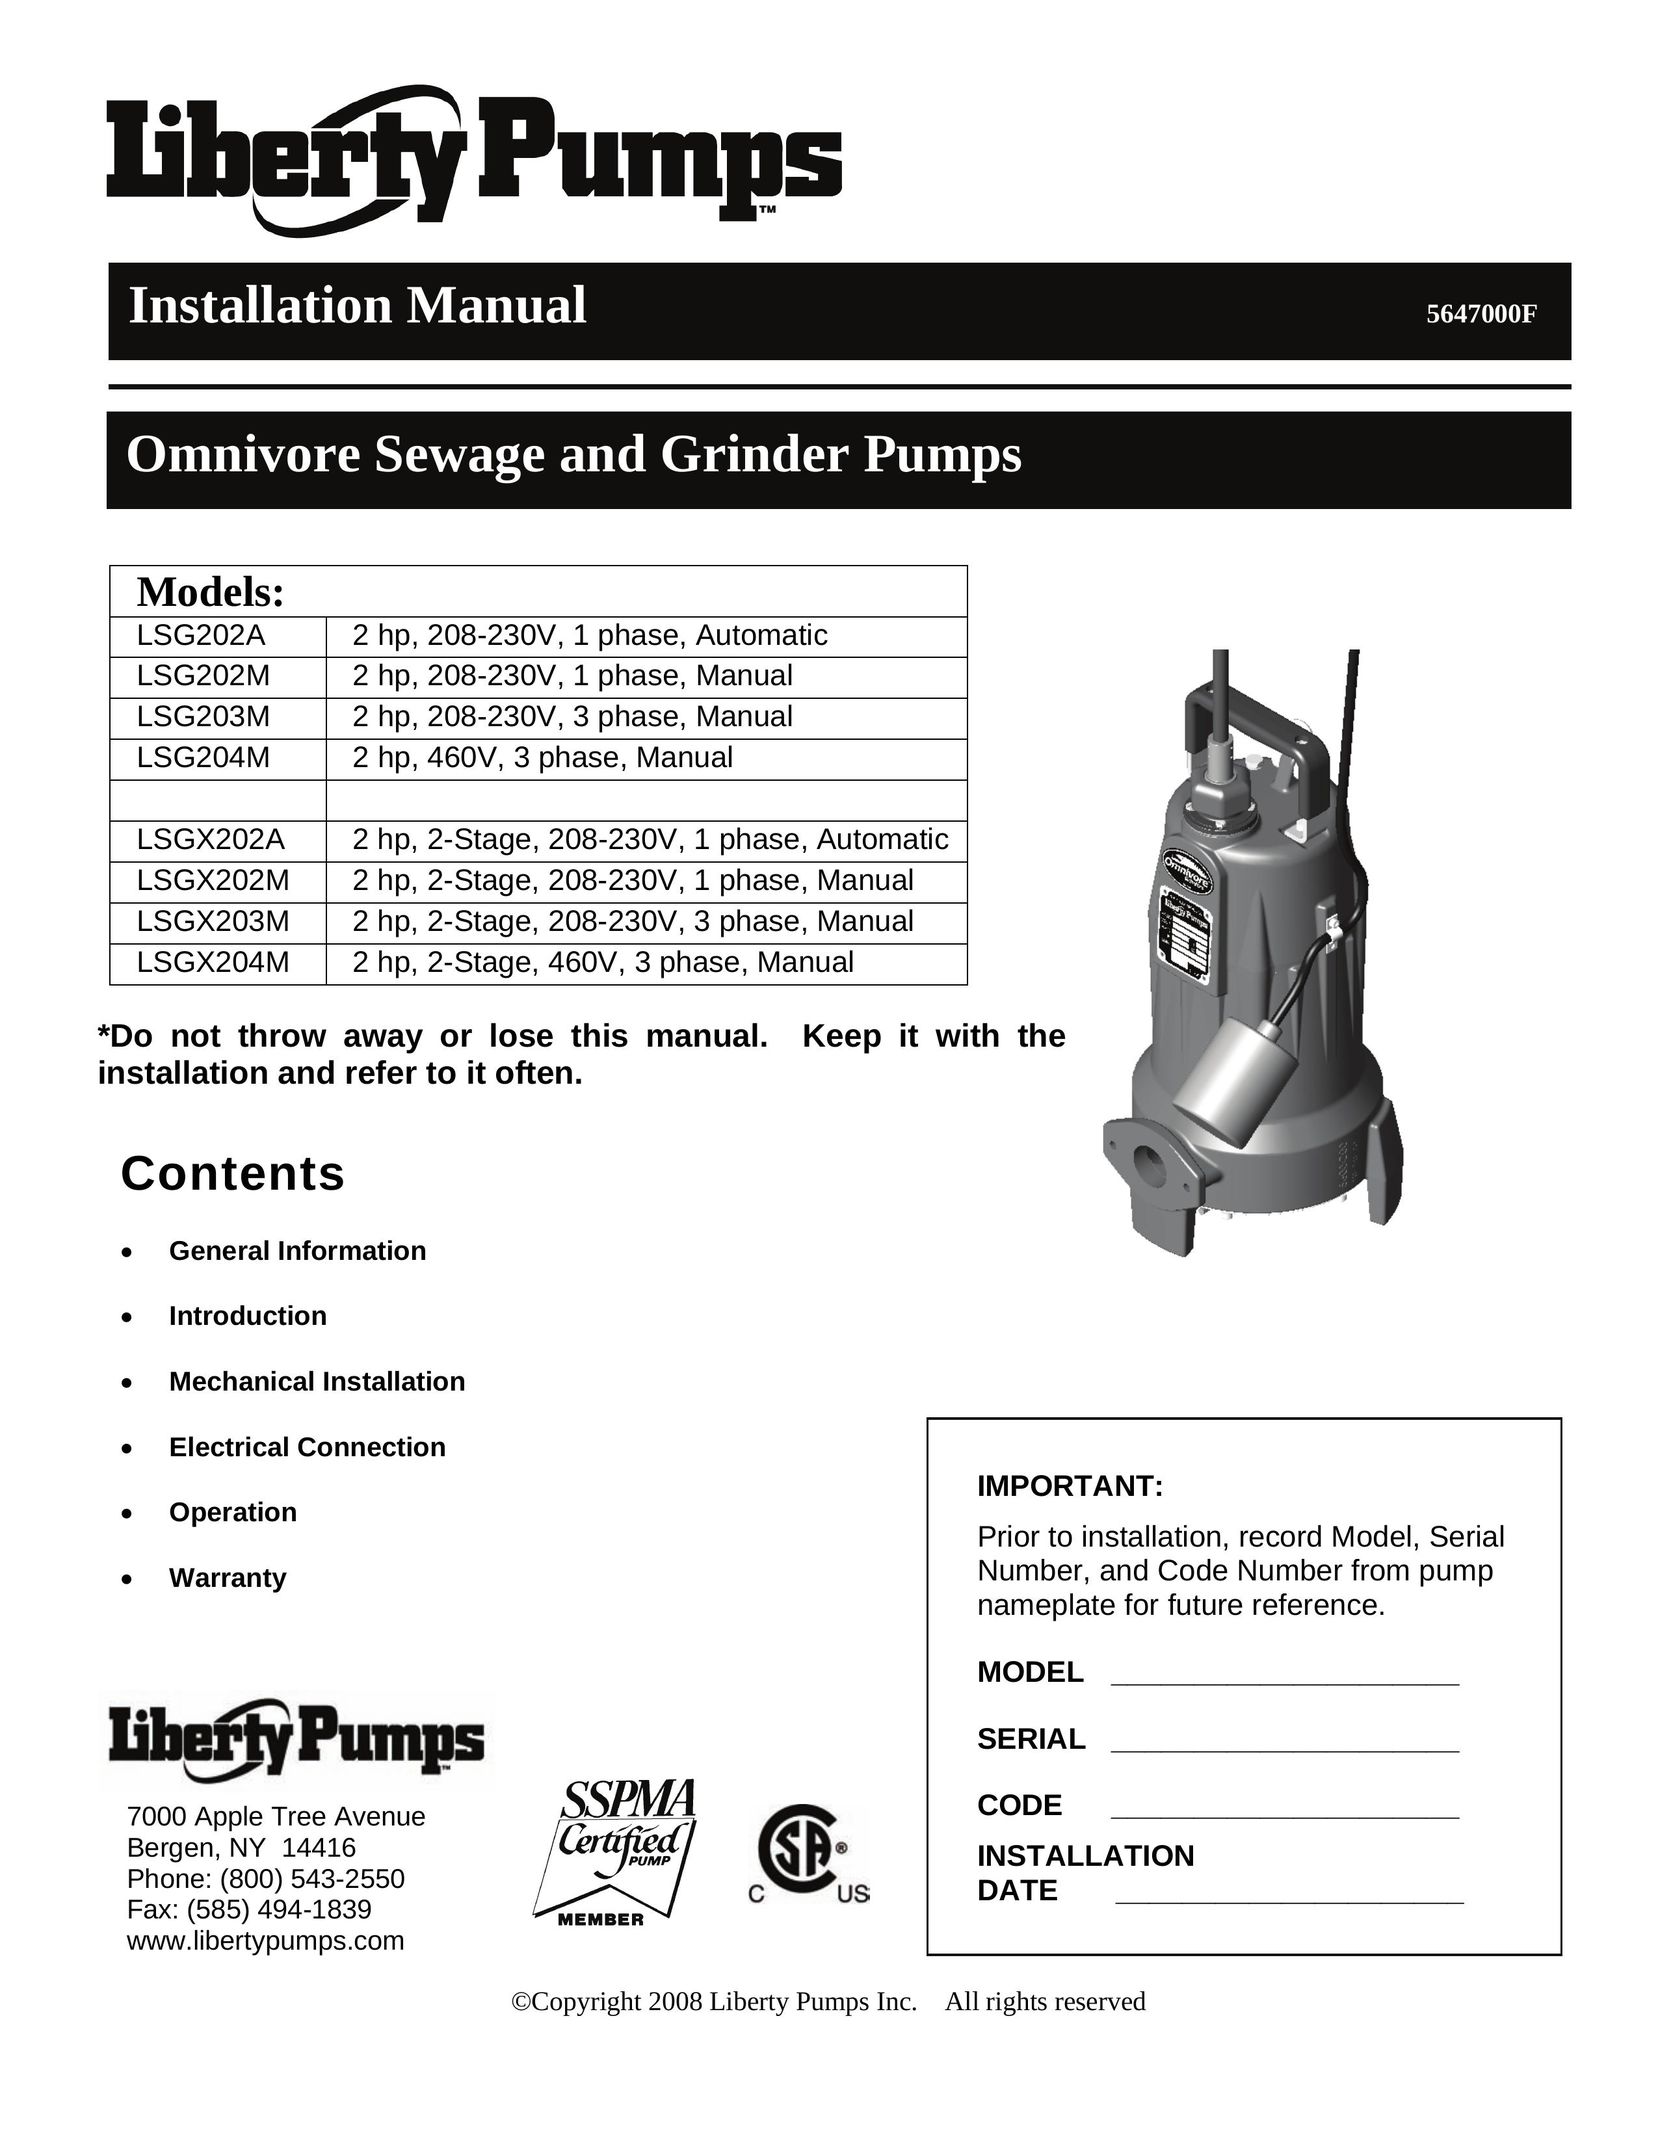 HP (Hewlett-Packard) LSGX204M Grinder User Manual